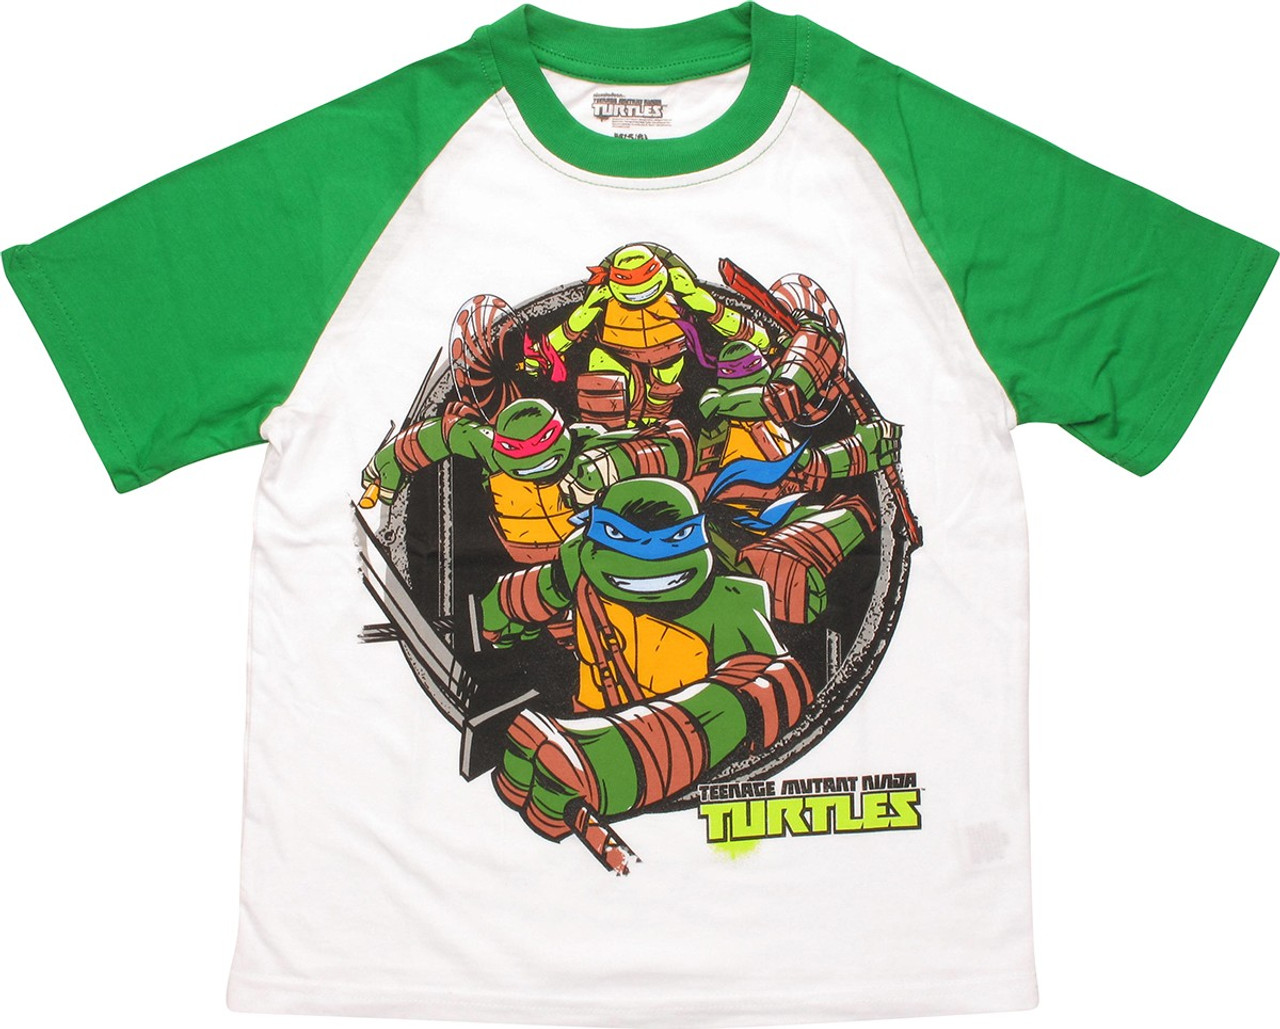 Ninja Turtles Group Green Sleeved Juvenile T-Shirt